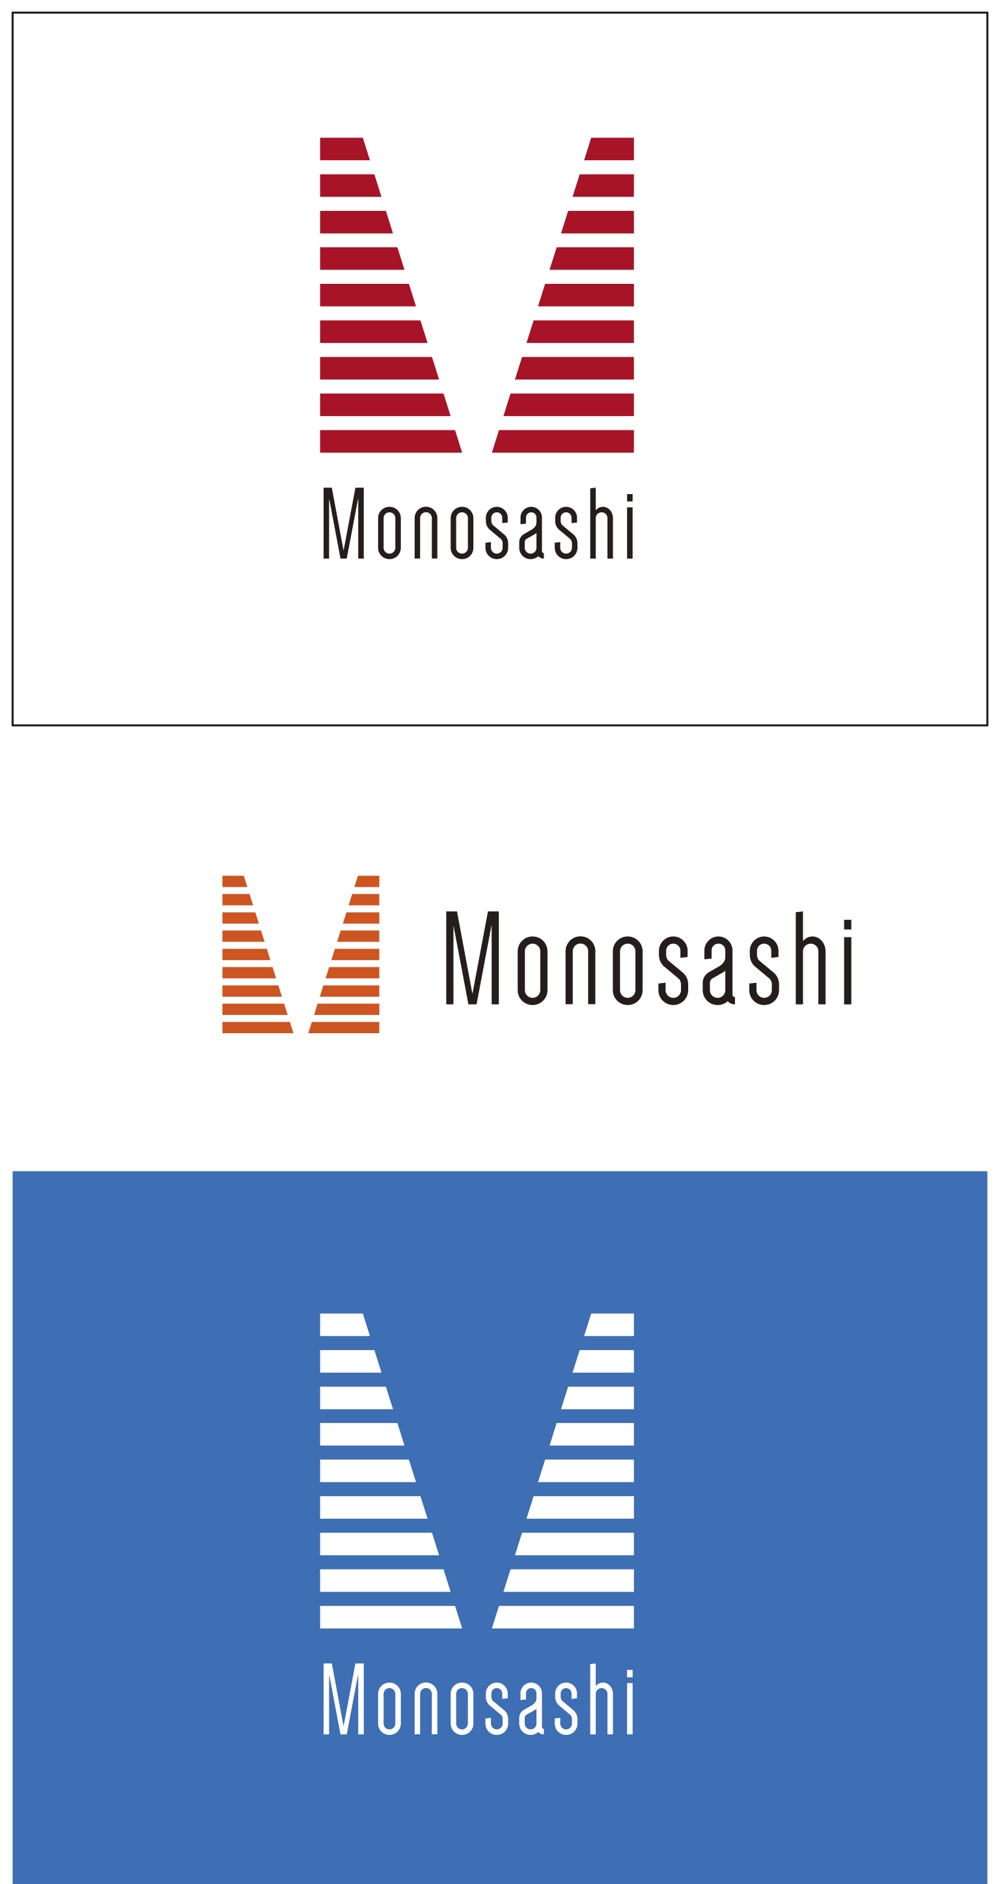 Monosashi-005 2.jpg